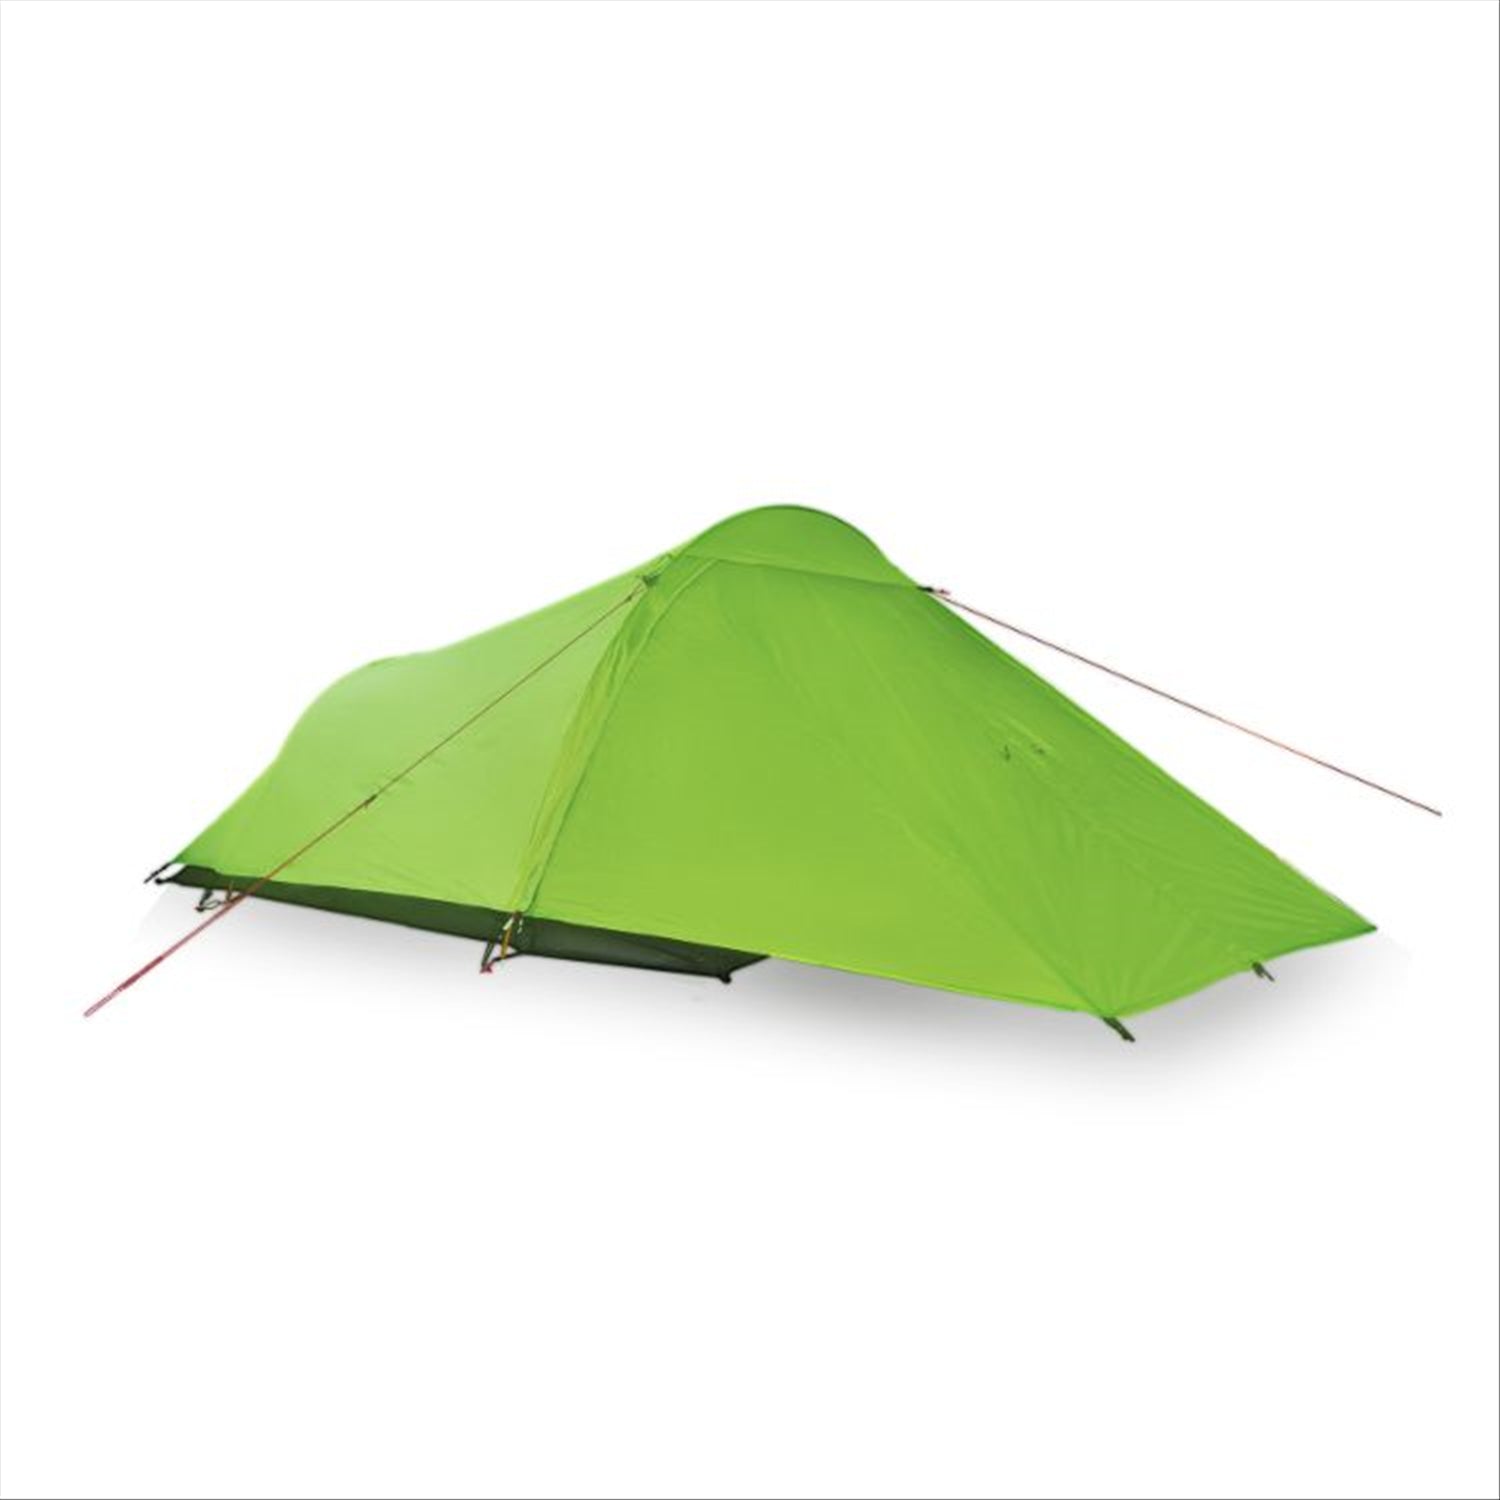 Orson Ranger 2 Tent